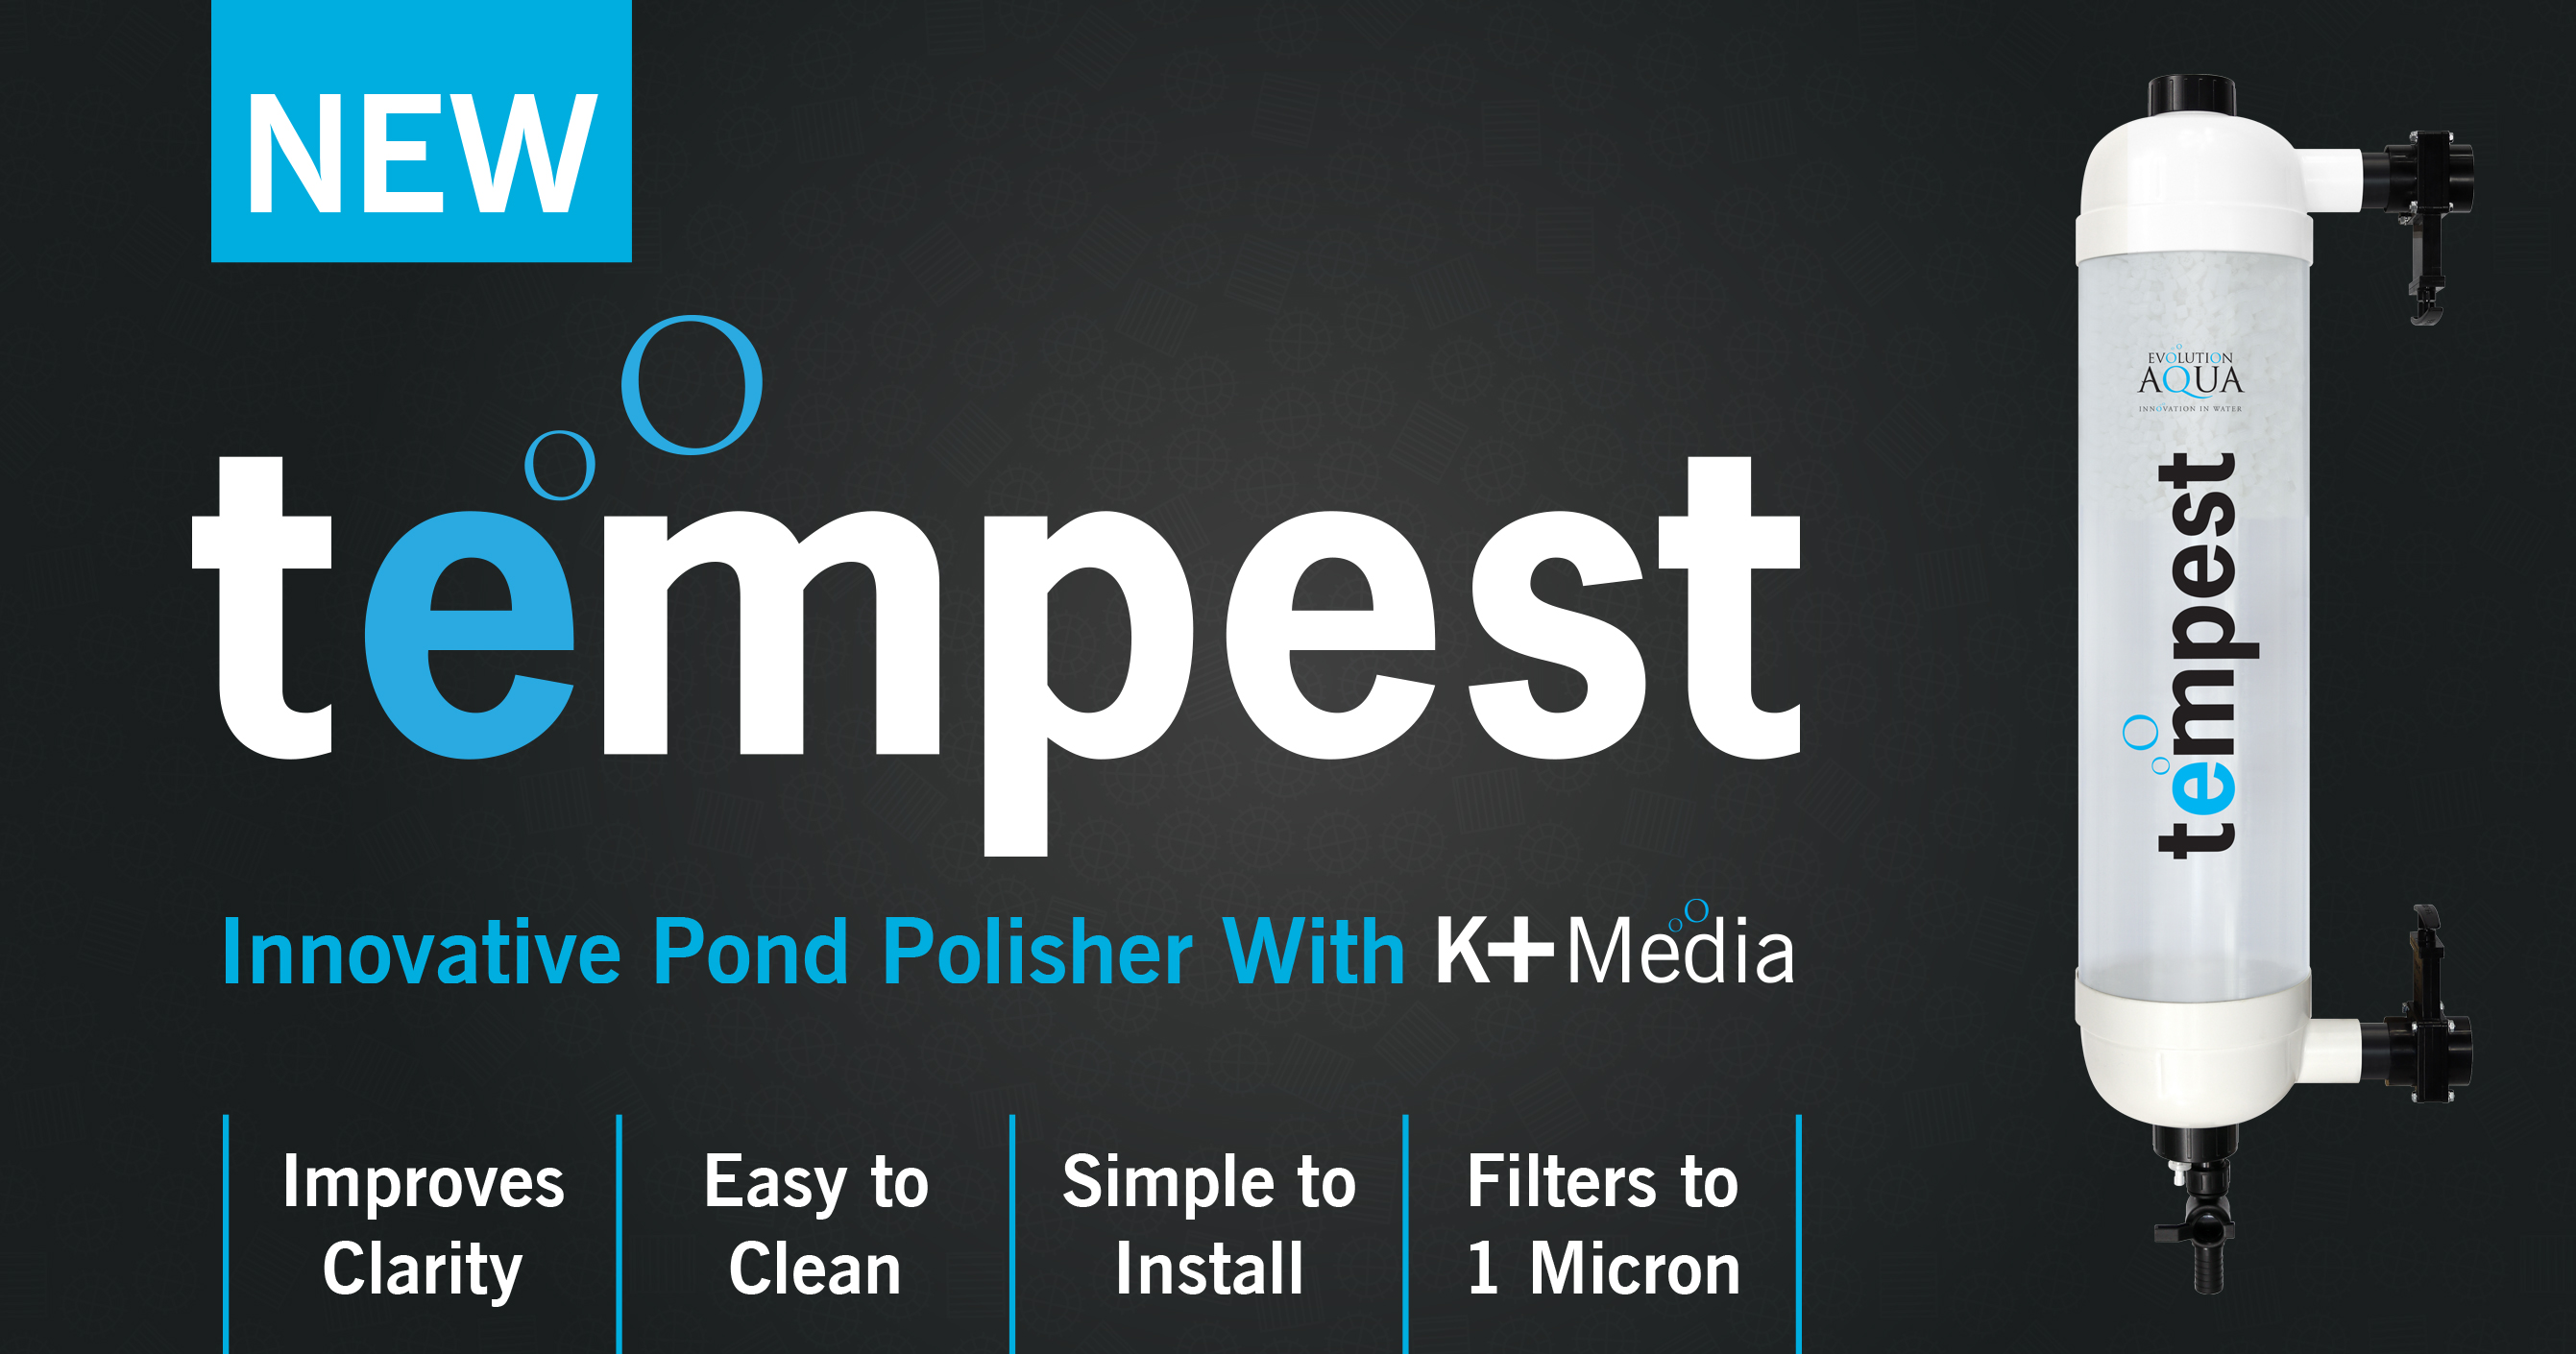 NEW Tempest - Innovative Pond Polisher With K+Media